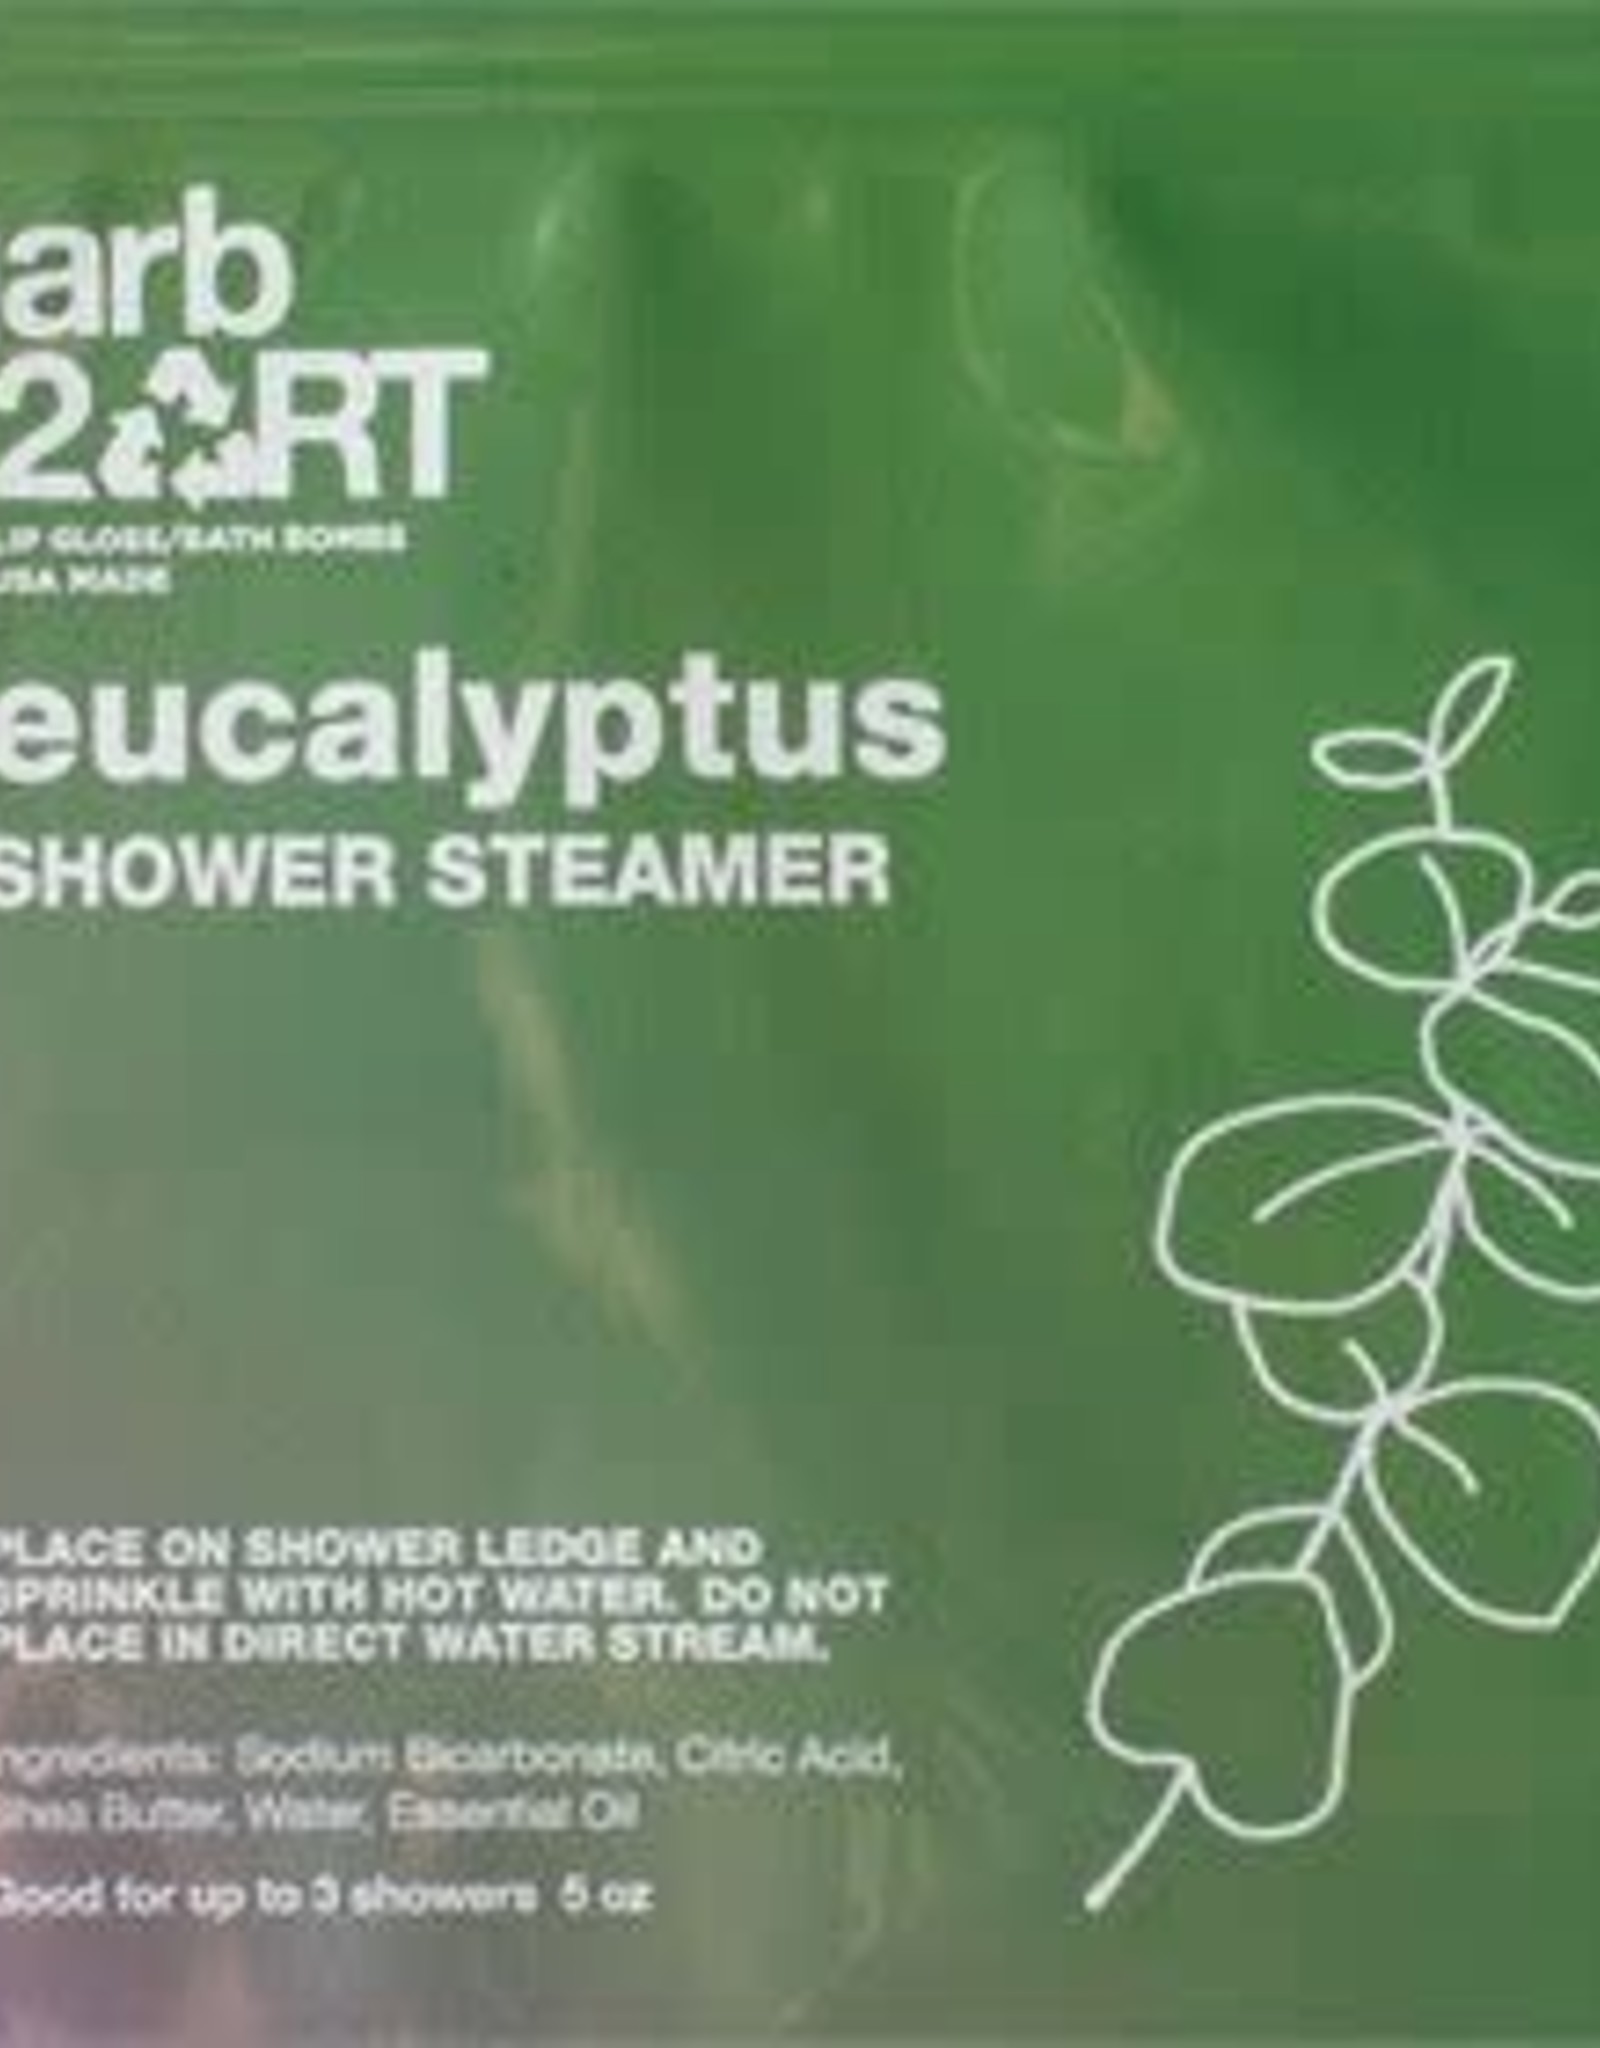 Personal Care Garb2art - Shower Steamer Eucalyptus